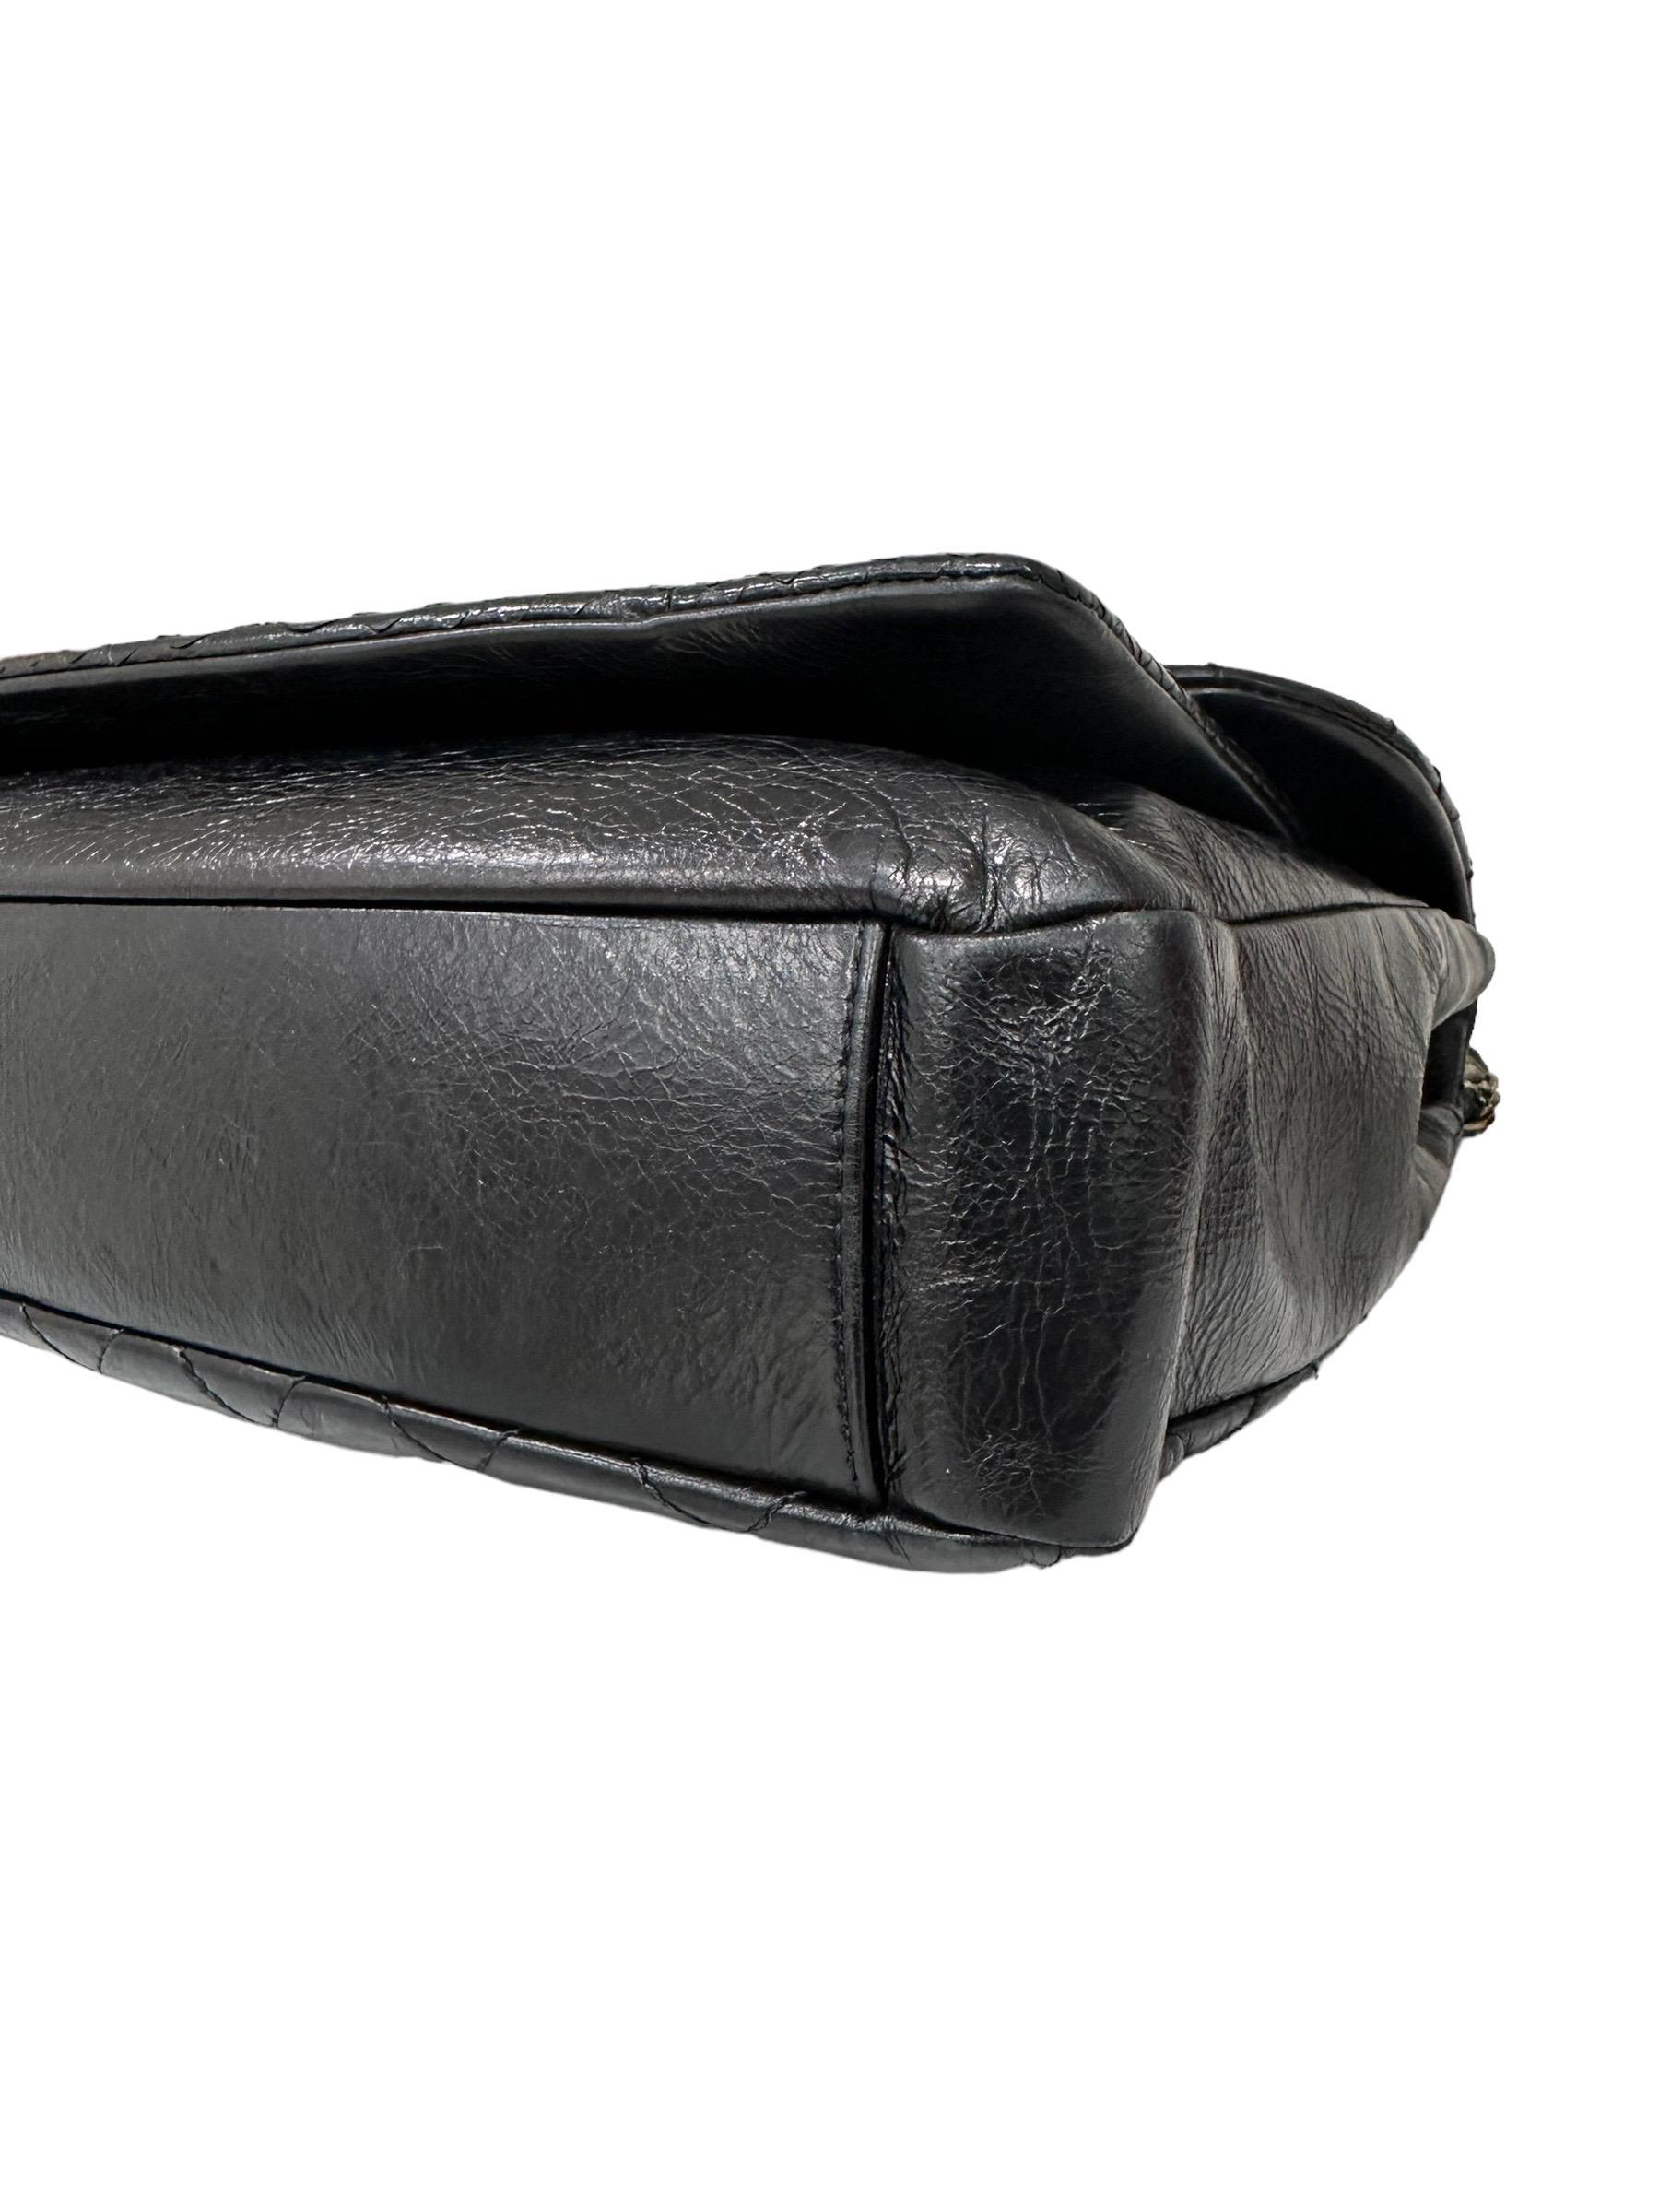 2016 Chanel Urban Mix  Flap Black Quilted Leather Shoulder Bag For Sale 5